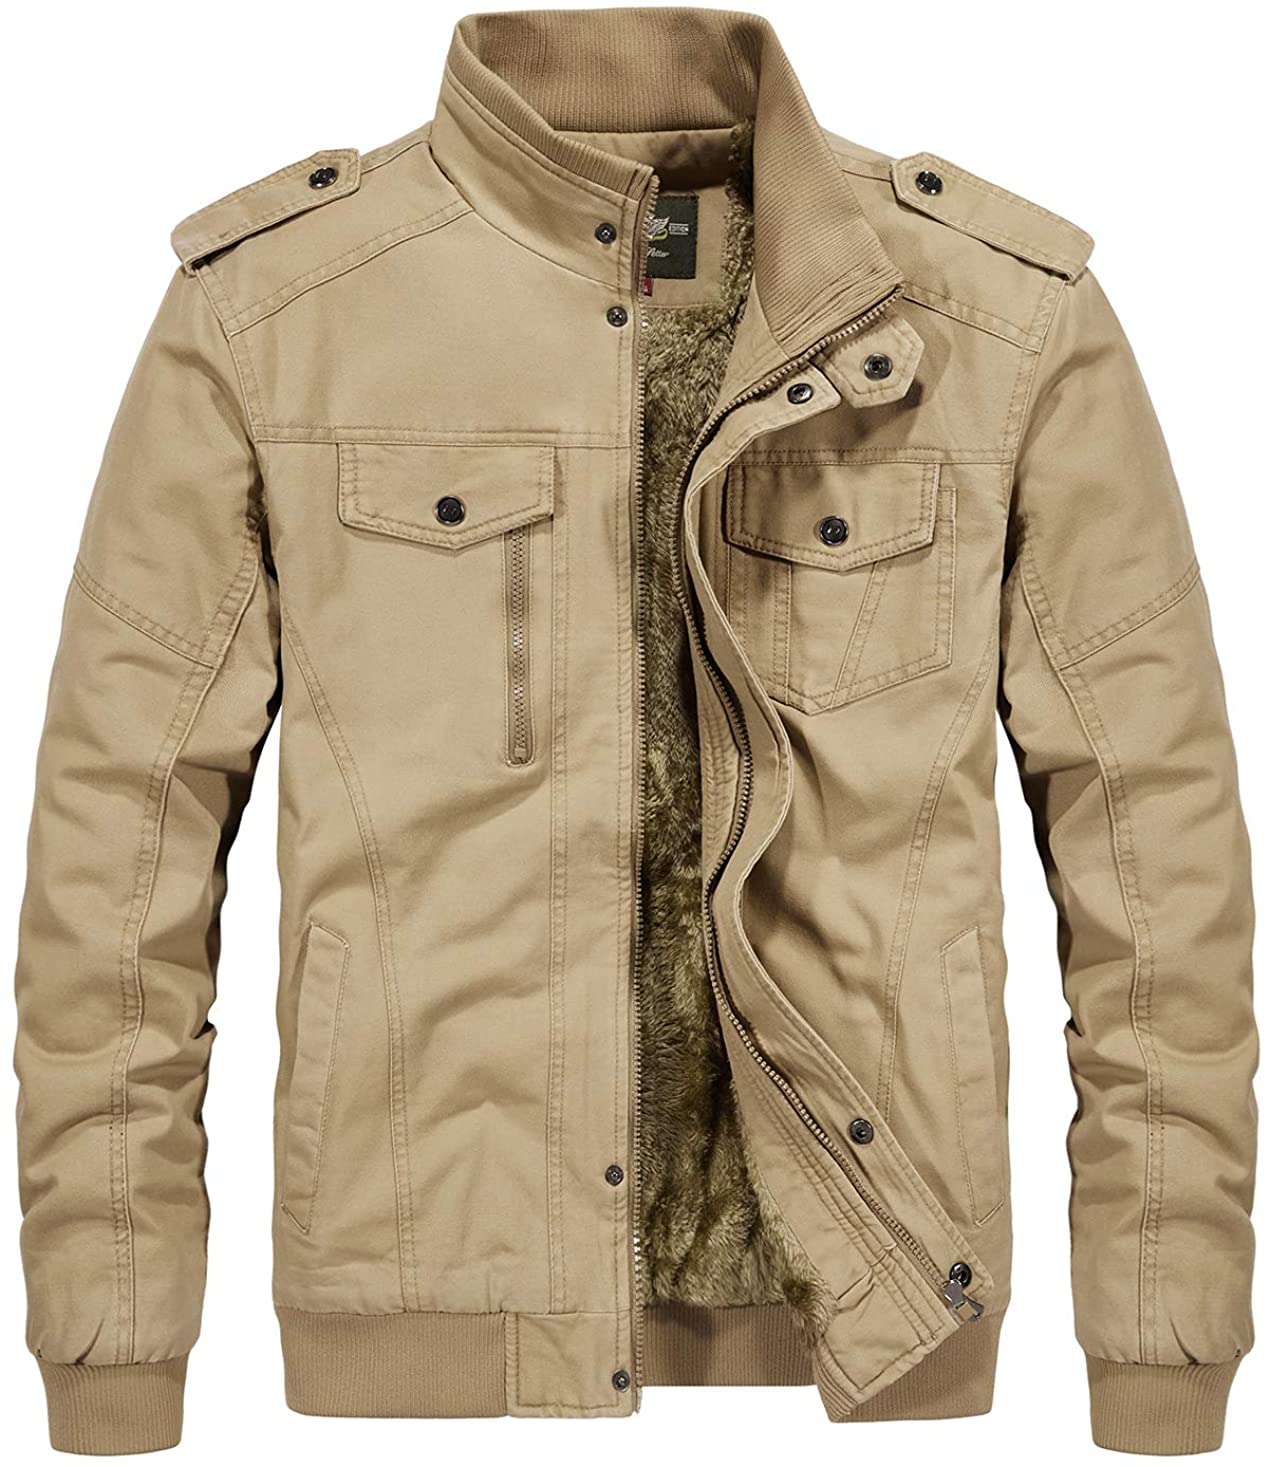 RongYue Men's Winter Thicken Cotton Military Jacket Fleece Fur